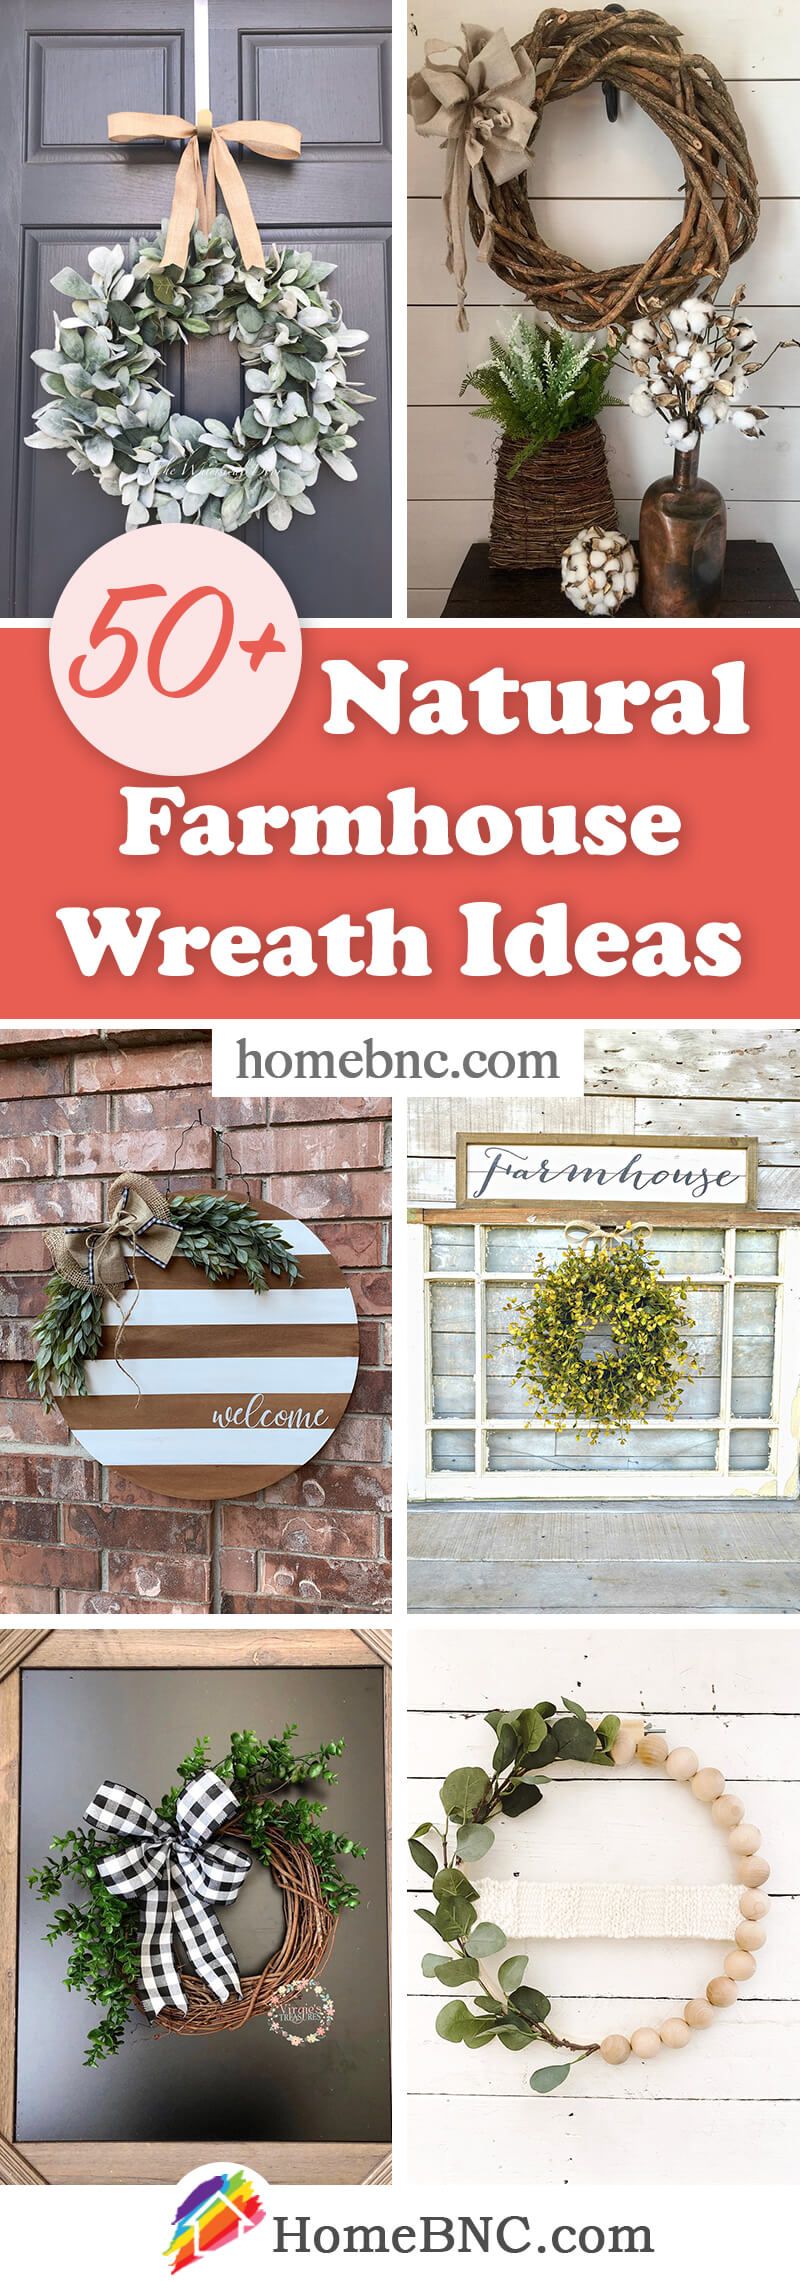 Rustic Farmhouse Wreath Designs